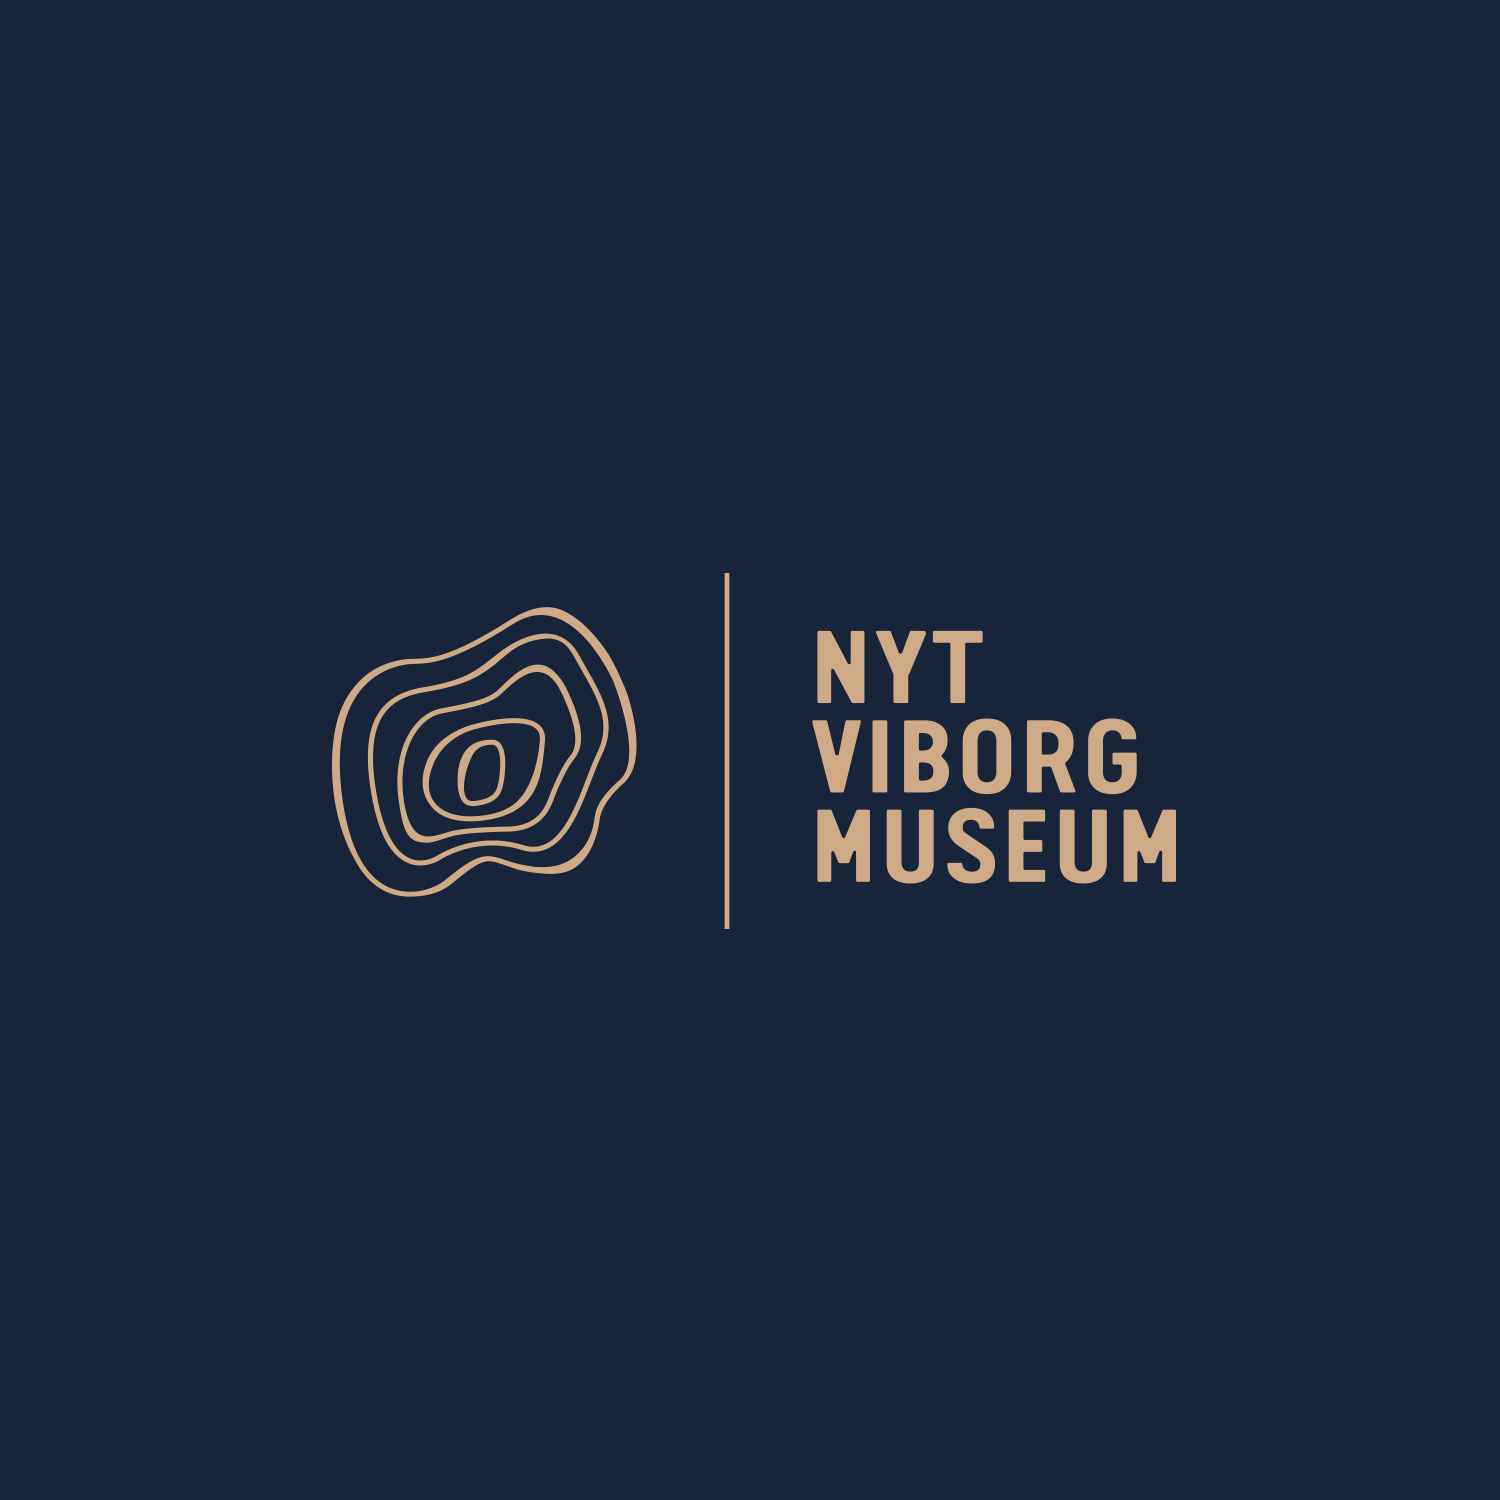 Nyt Viborg Museum